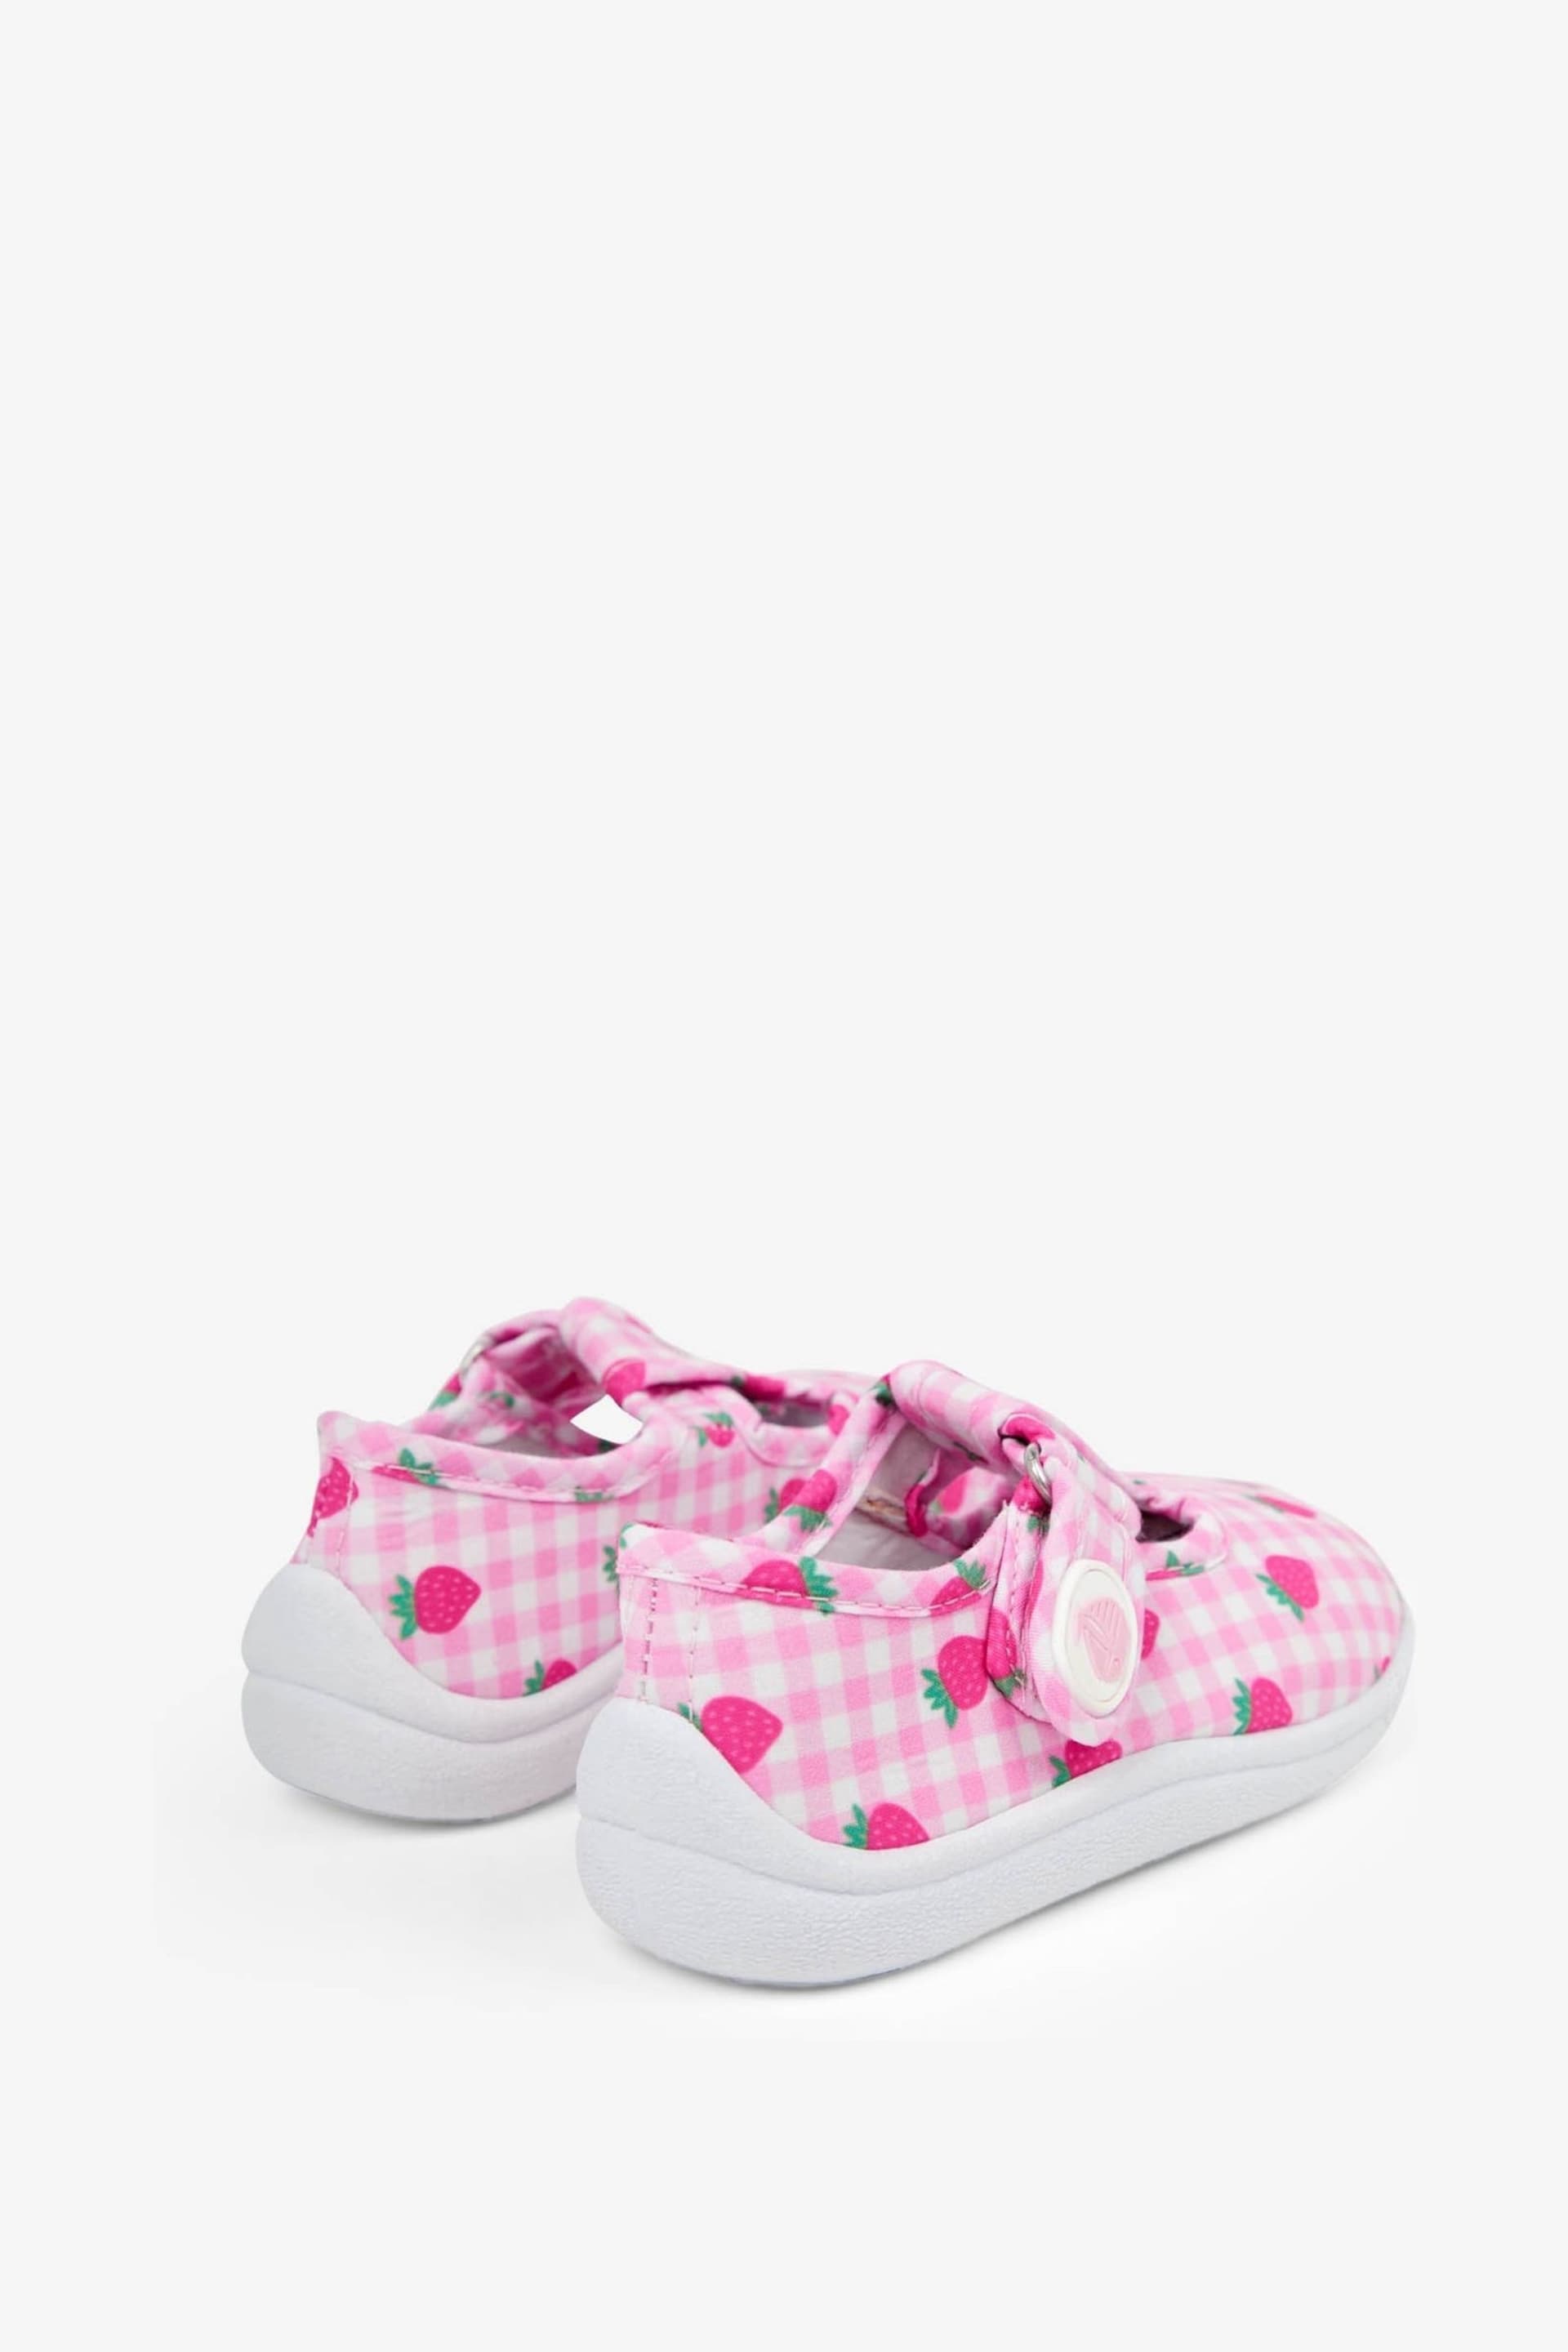 JoJo Maman Bébé Pink Girls' Strawberry Canvas Summer Shoes - Image 2 of 3